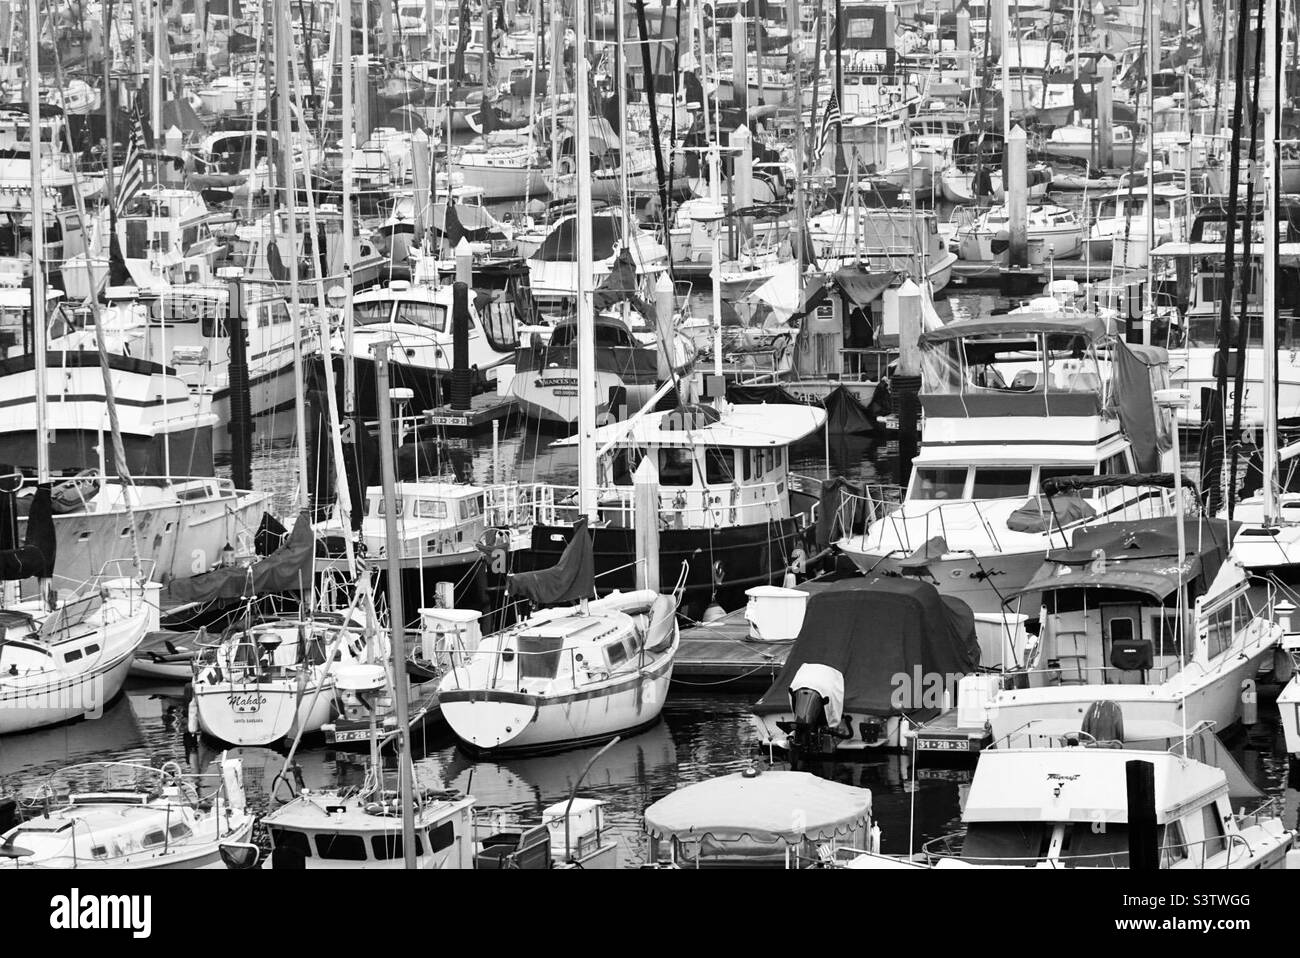 Dozens of boats moored at harbor in Santa Barbara, creating abstract pattern of masts and hulls. Black and white Stock Photo